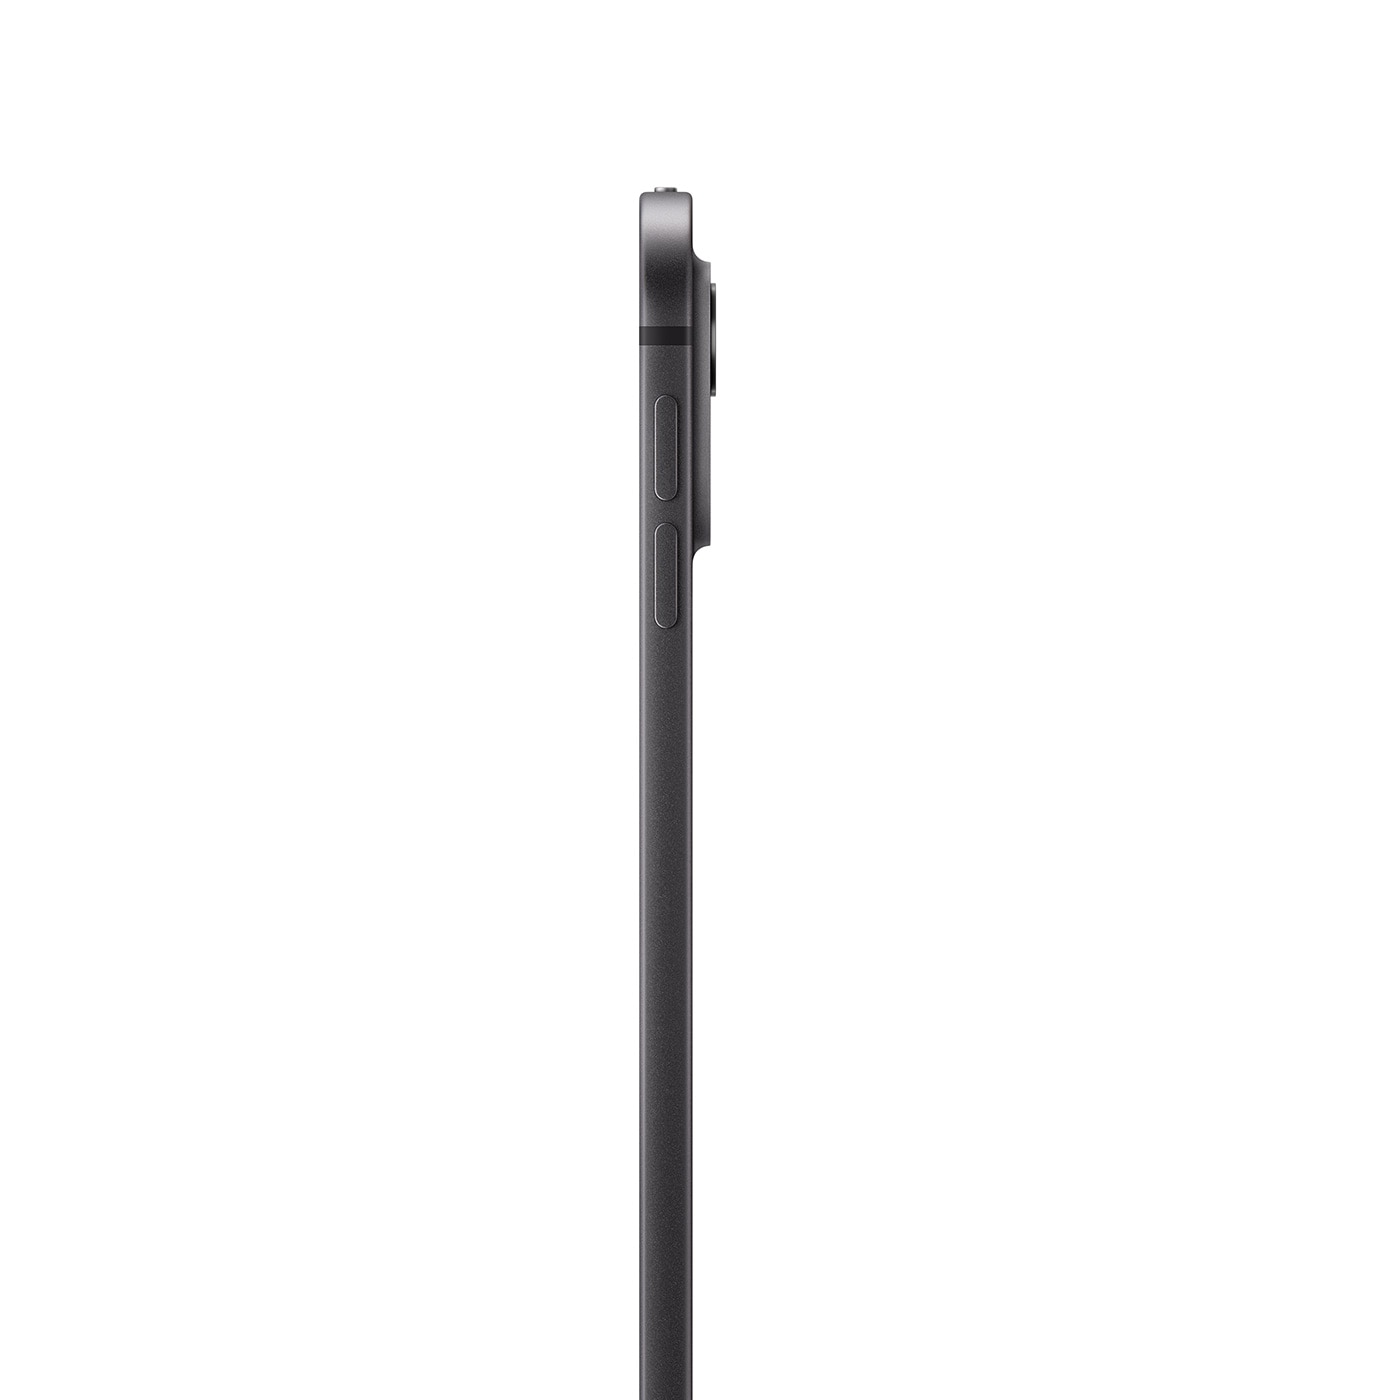 Apple 13 吋 iPad Pro Wi-Fi 512GB 配備標準玻璃 太空黑